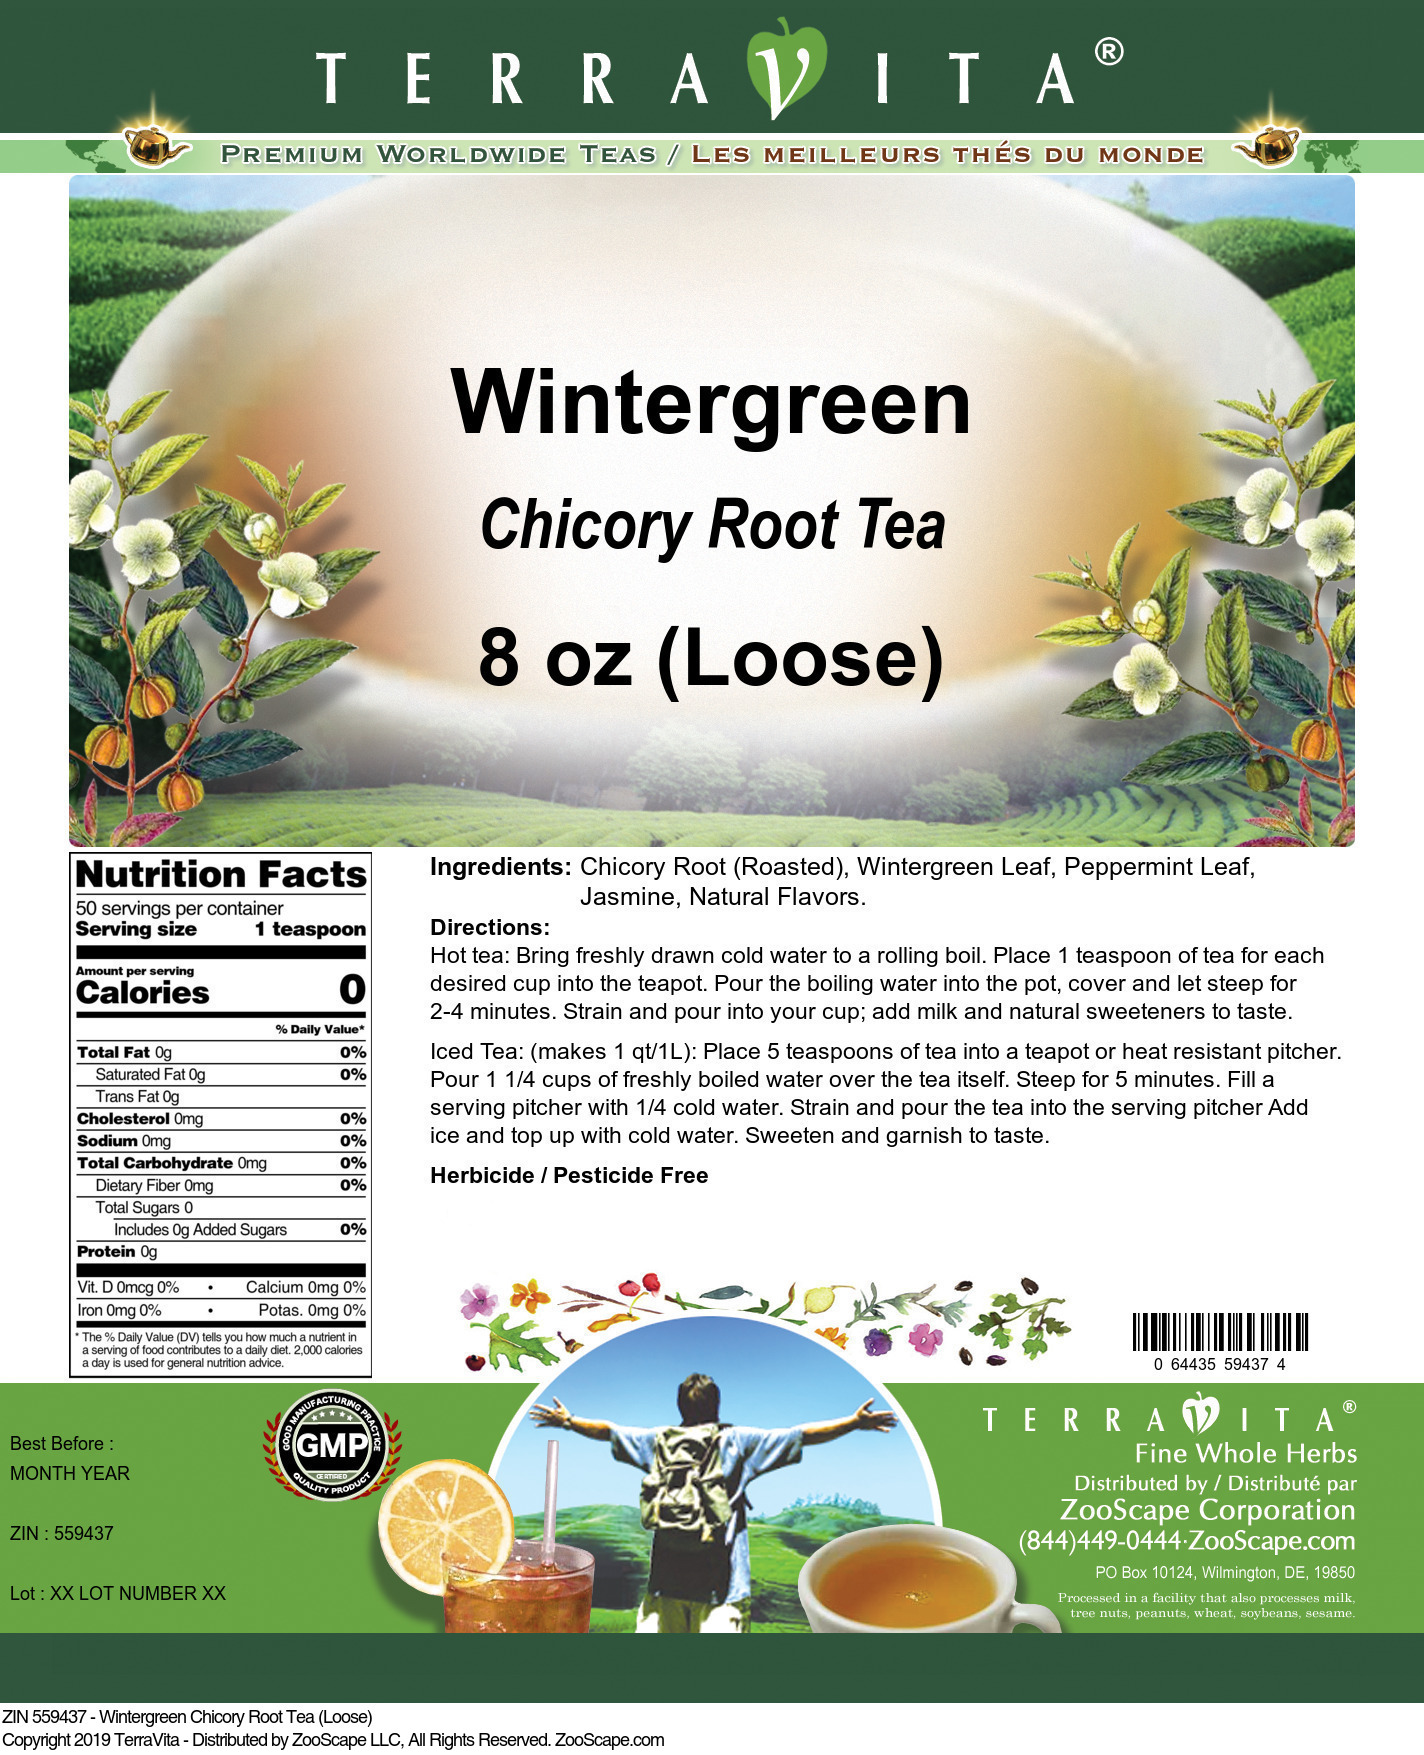 Wintergreen Chicory Root Tea (Loose) - Label